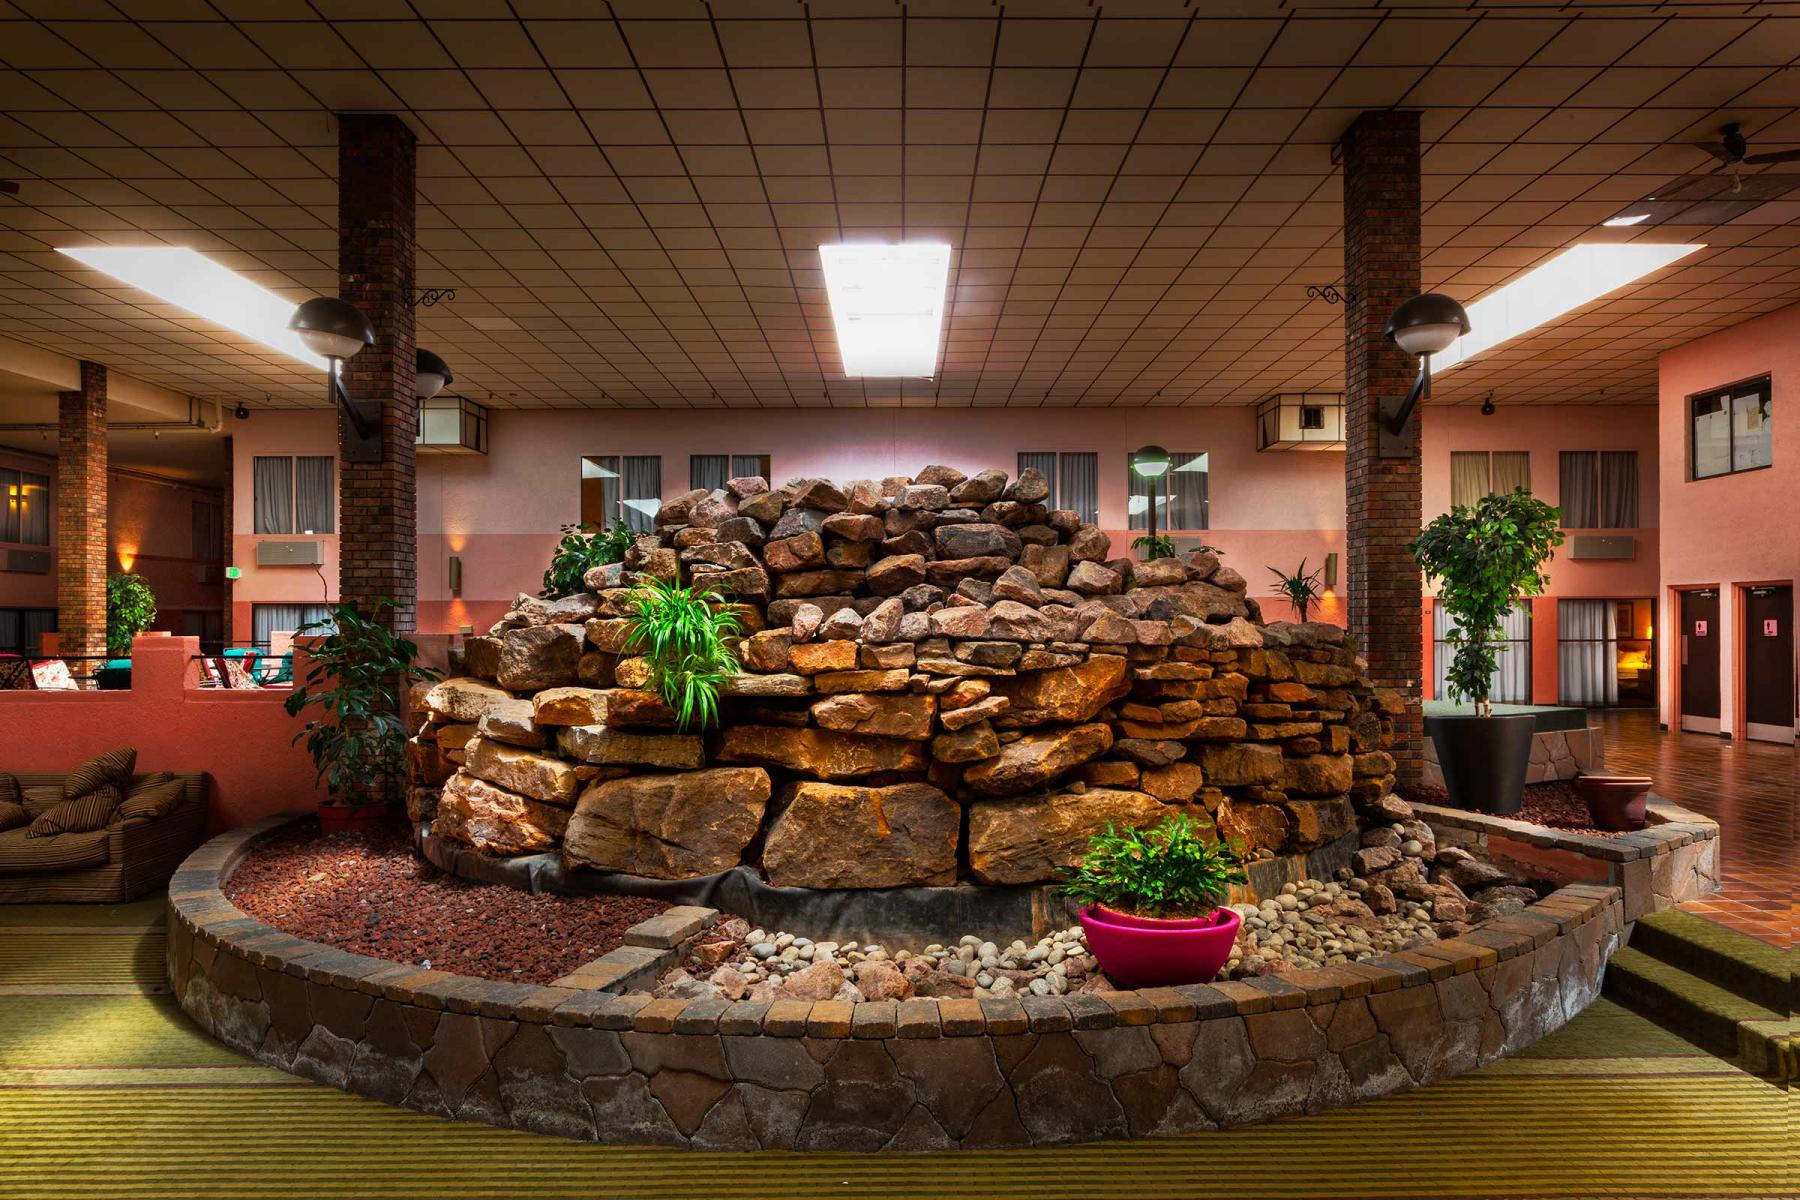 Rodeway Inn - Alamosa, Colorado - best rock garden lobby. : Visiting Mom : New York City portrait photographer